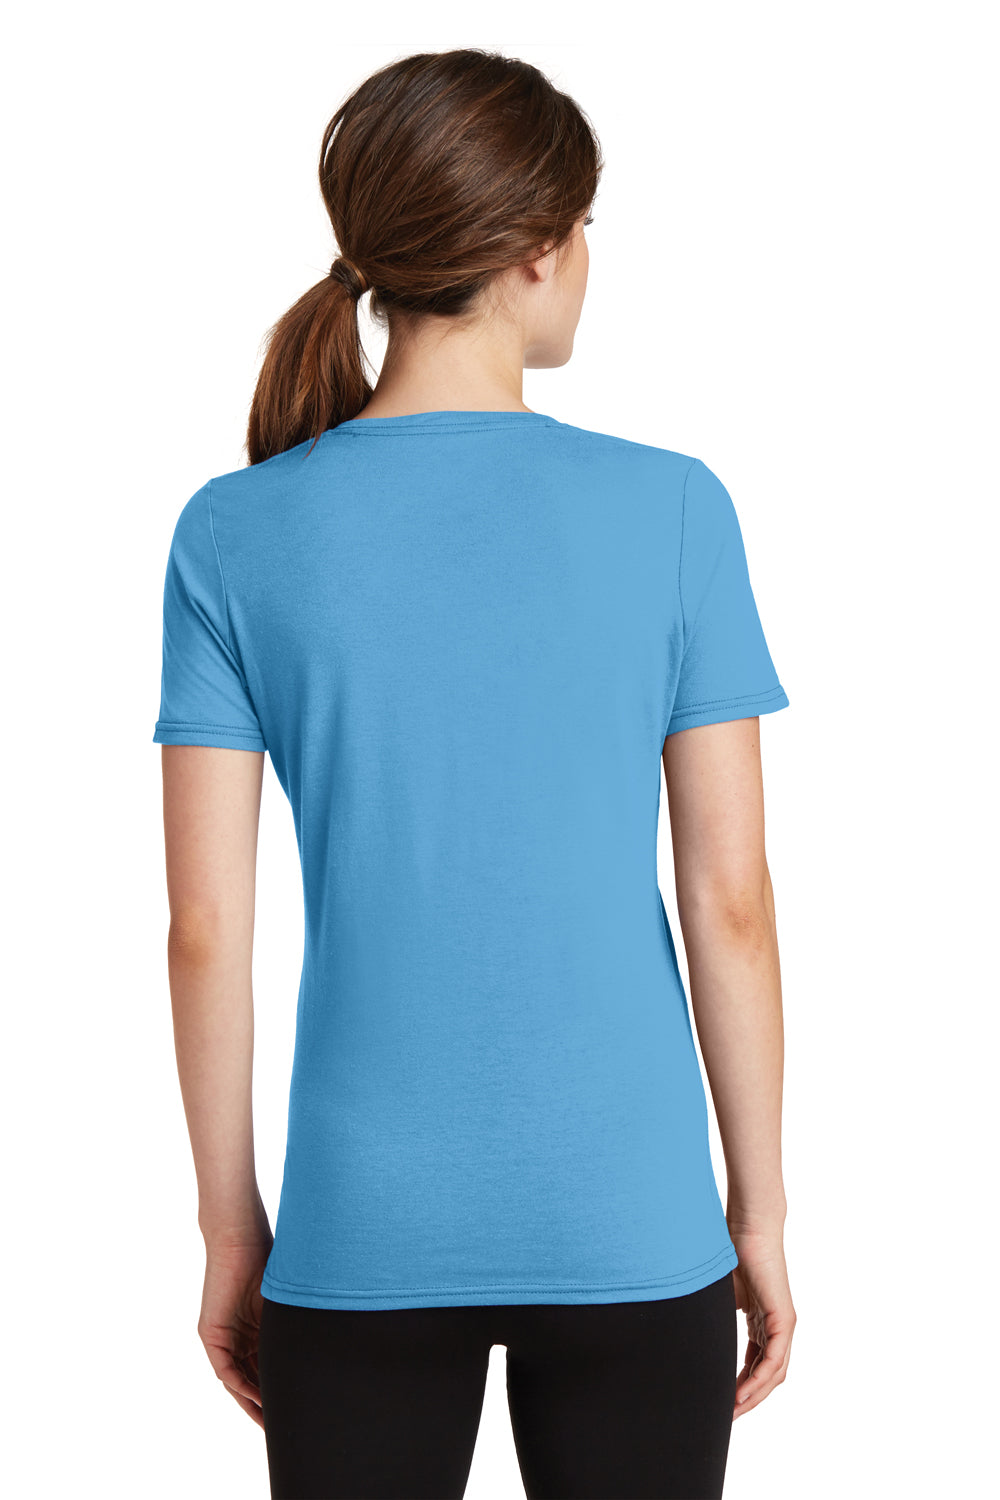 Port & Company LPC381V Womens Dry Zone Performance Moisture Wicking Short Sleeve V-Neck T-Shirt Aqua Blue Back